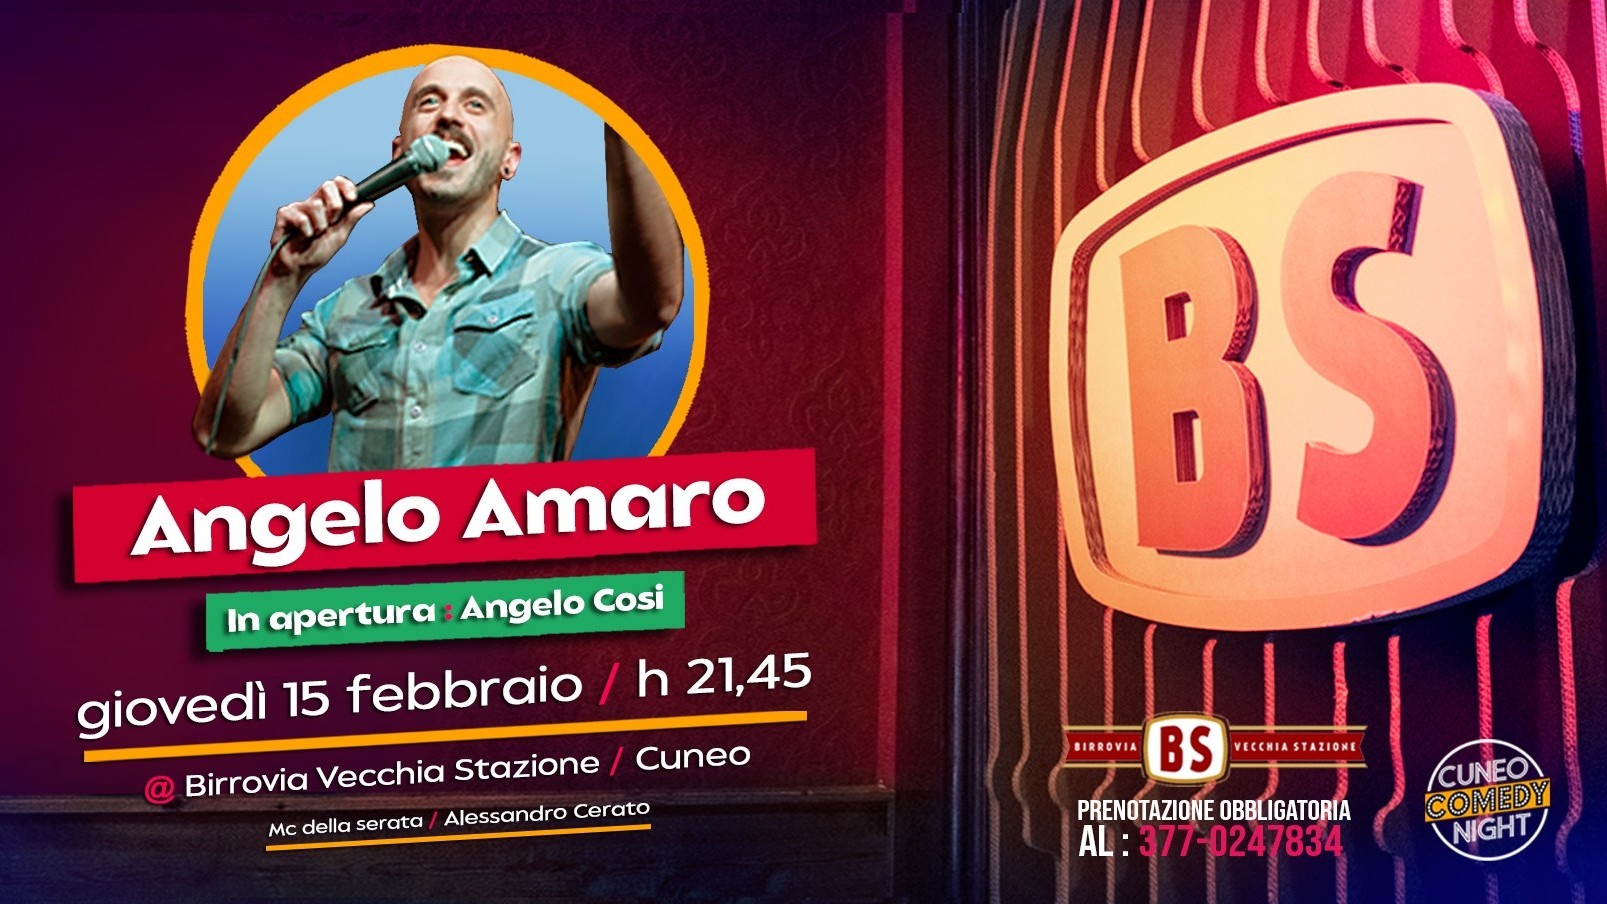 Angelo Amaro / Cuneo Comedy Night